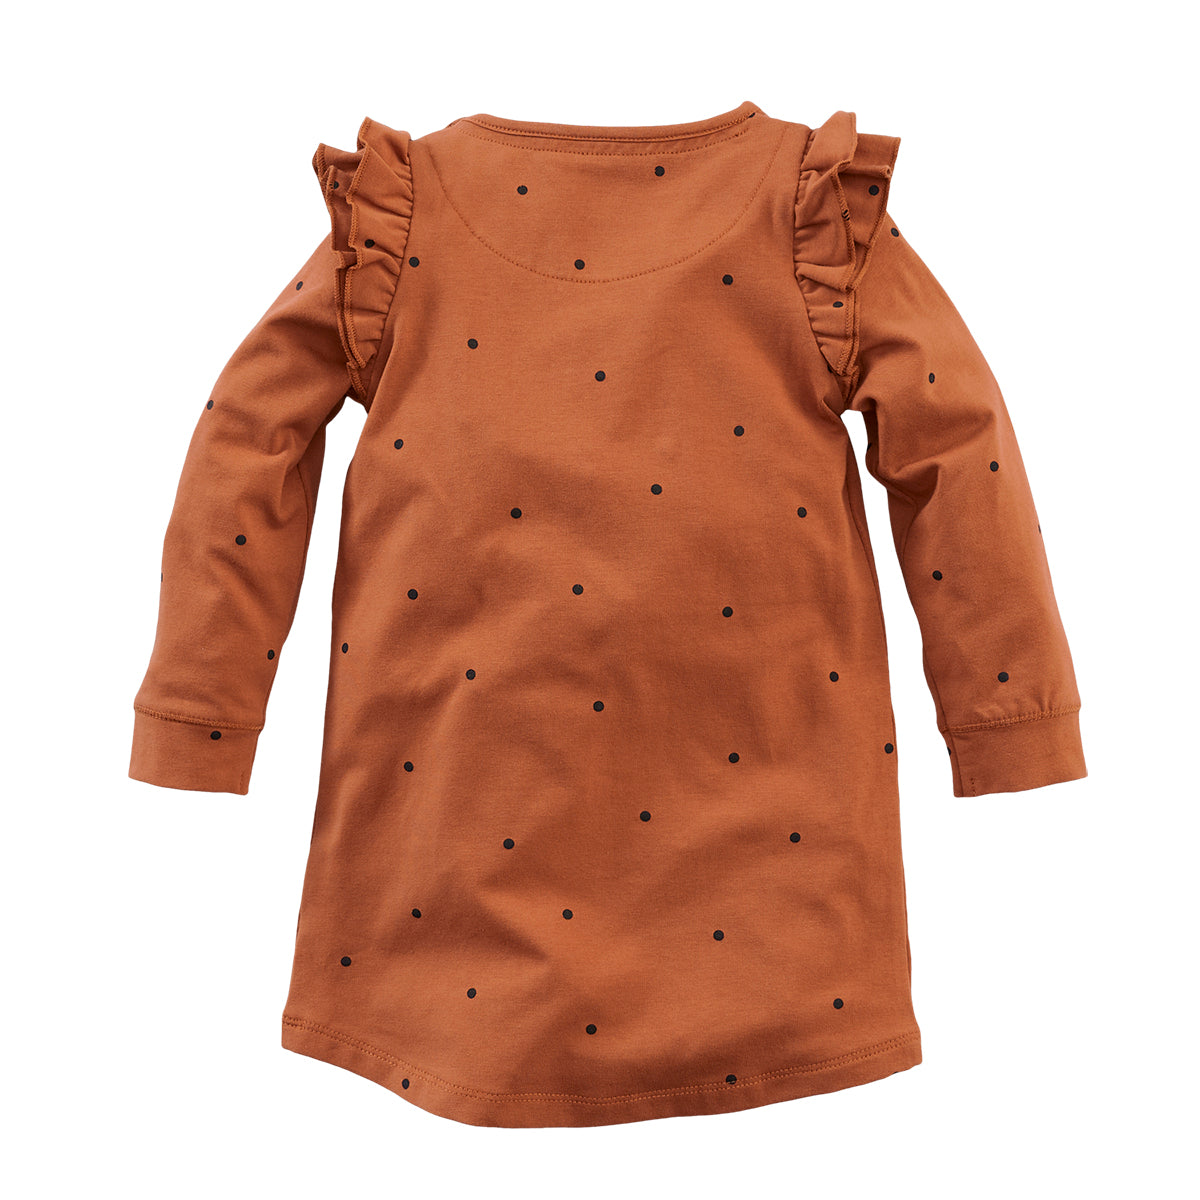 Z8 Limited Edition Dress Masala Copper Blush